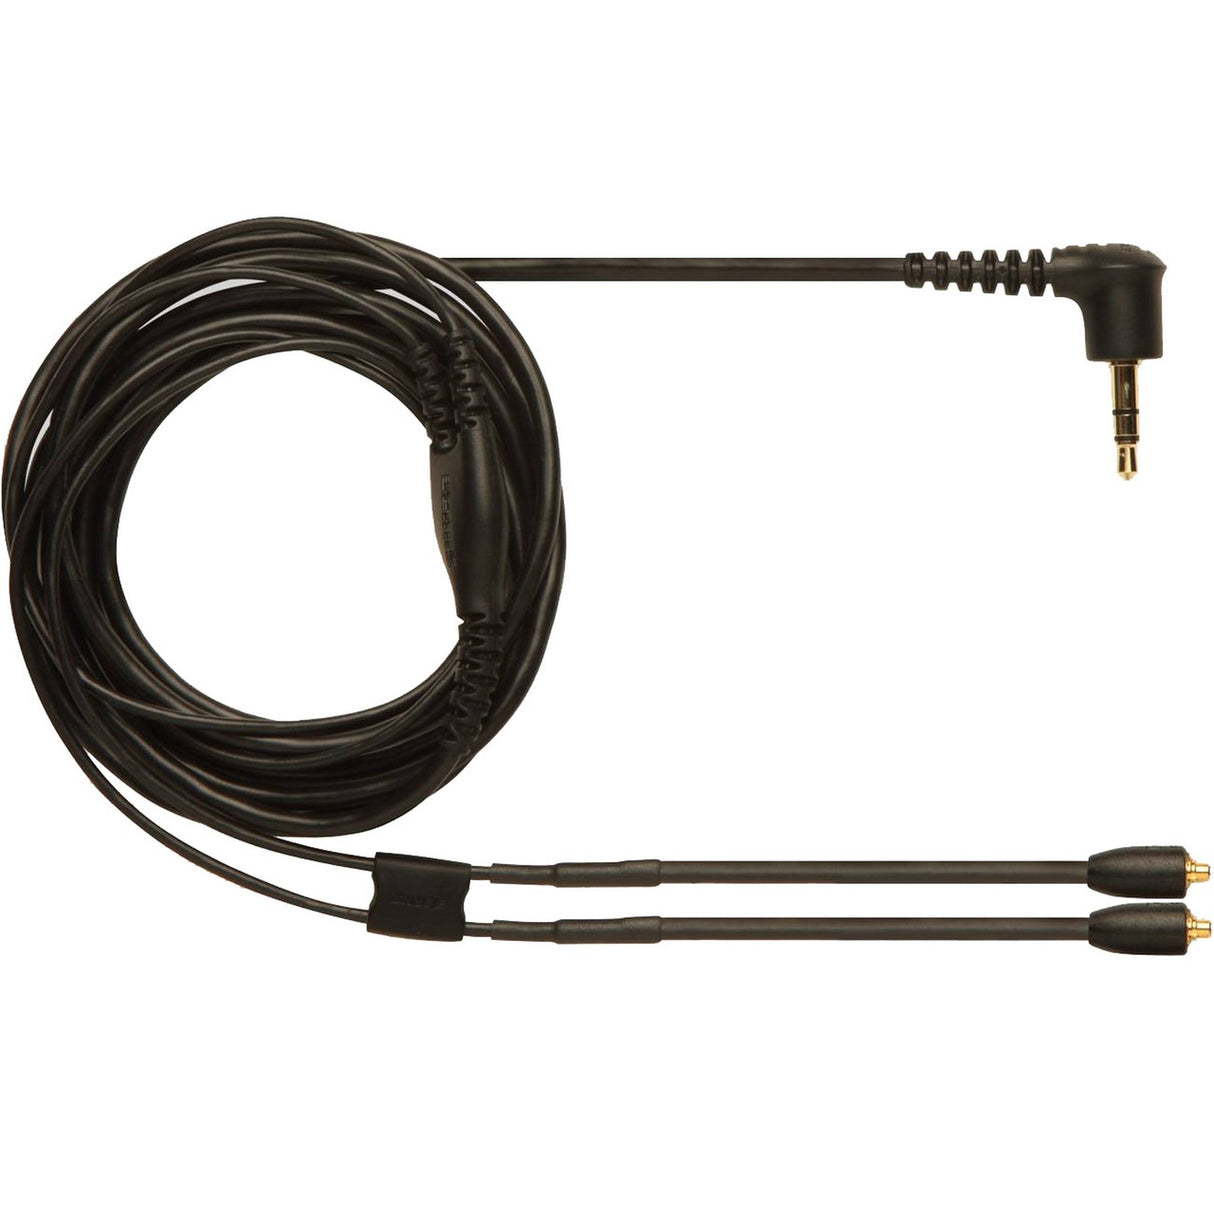 Shure EAC64BK | 64 Inch Detachable Earphone Cable for SE Earphones, Black